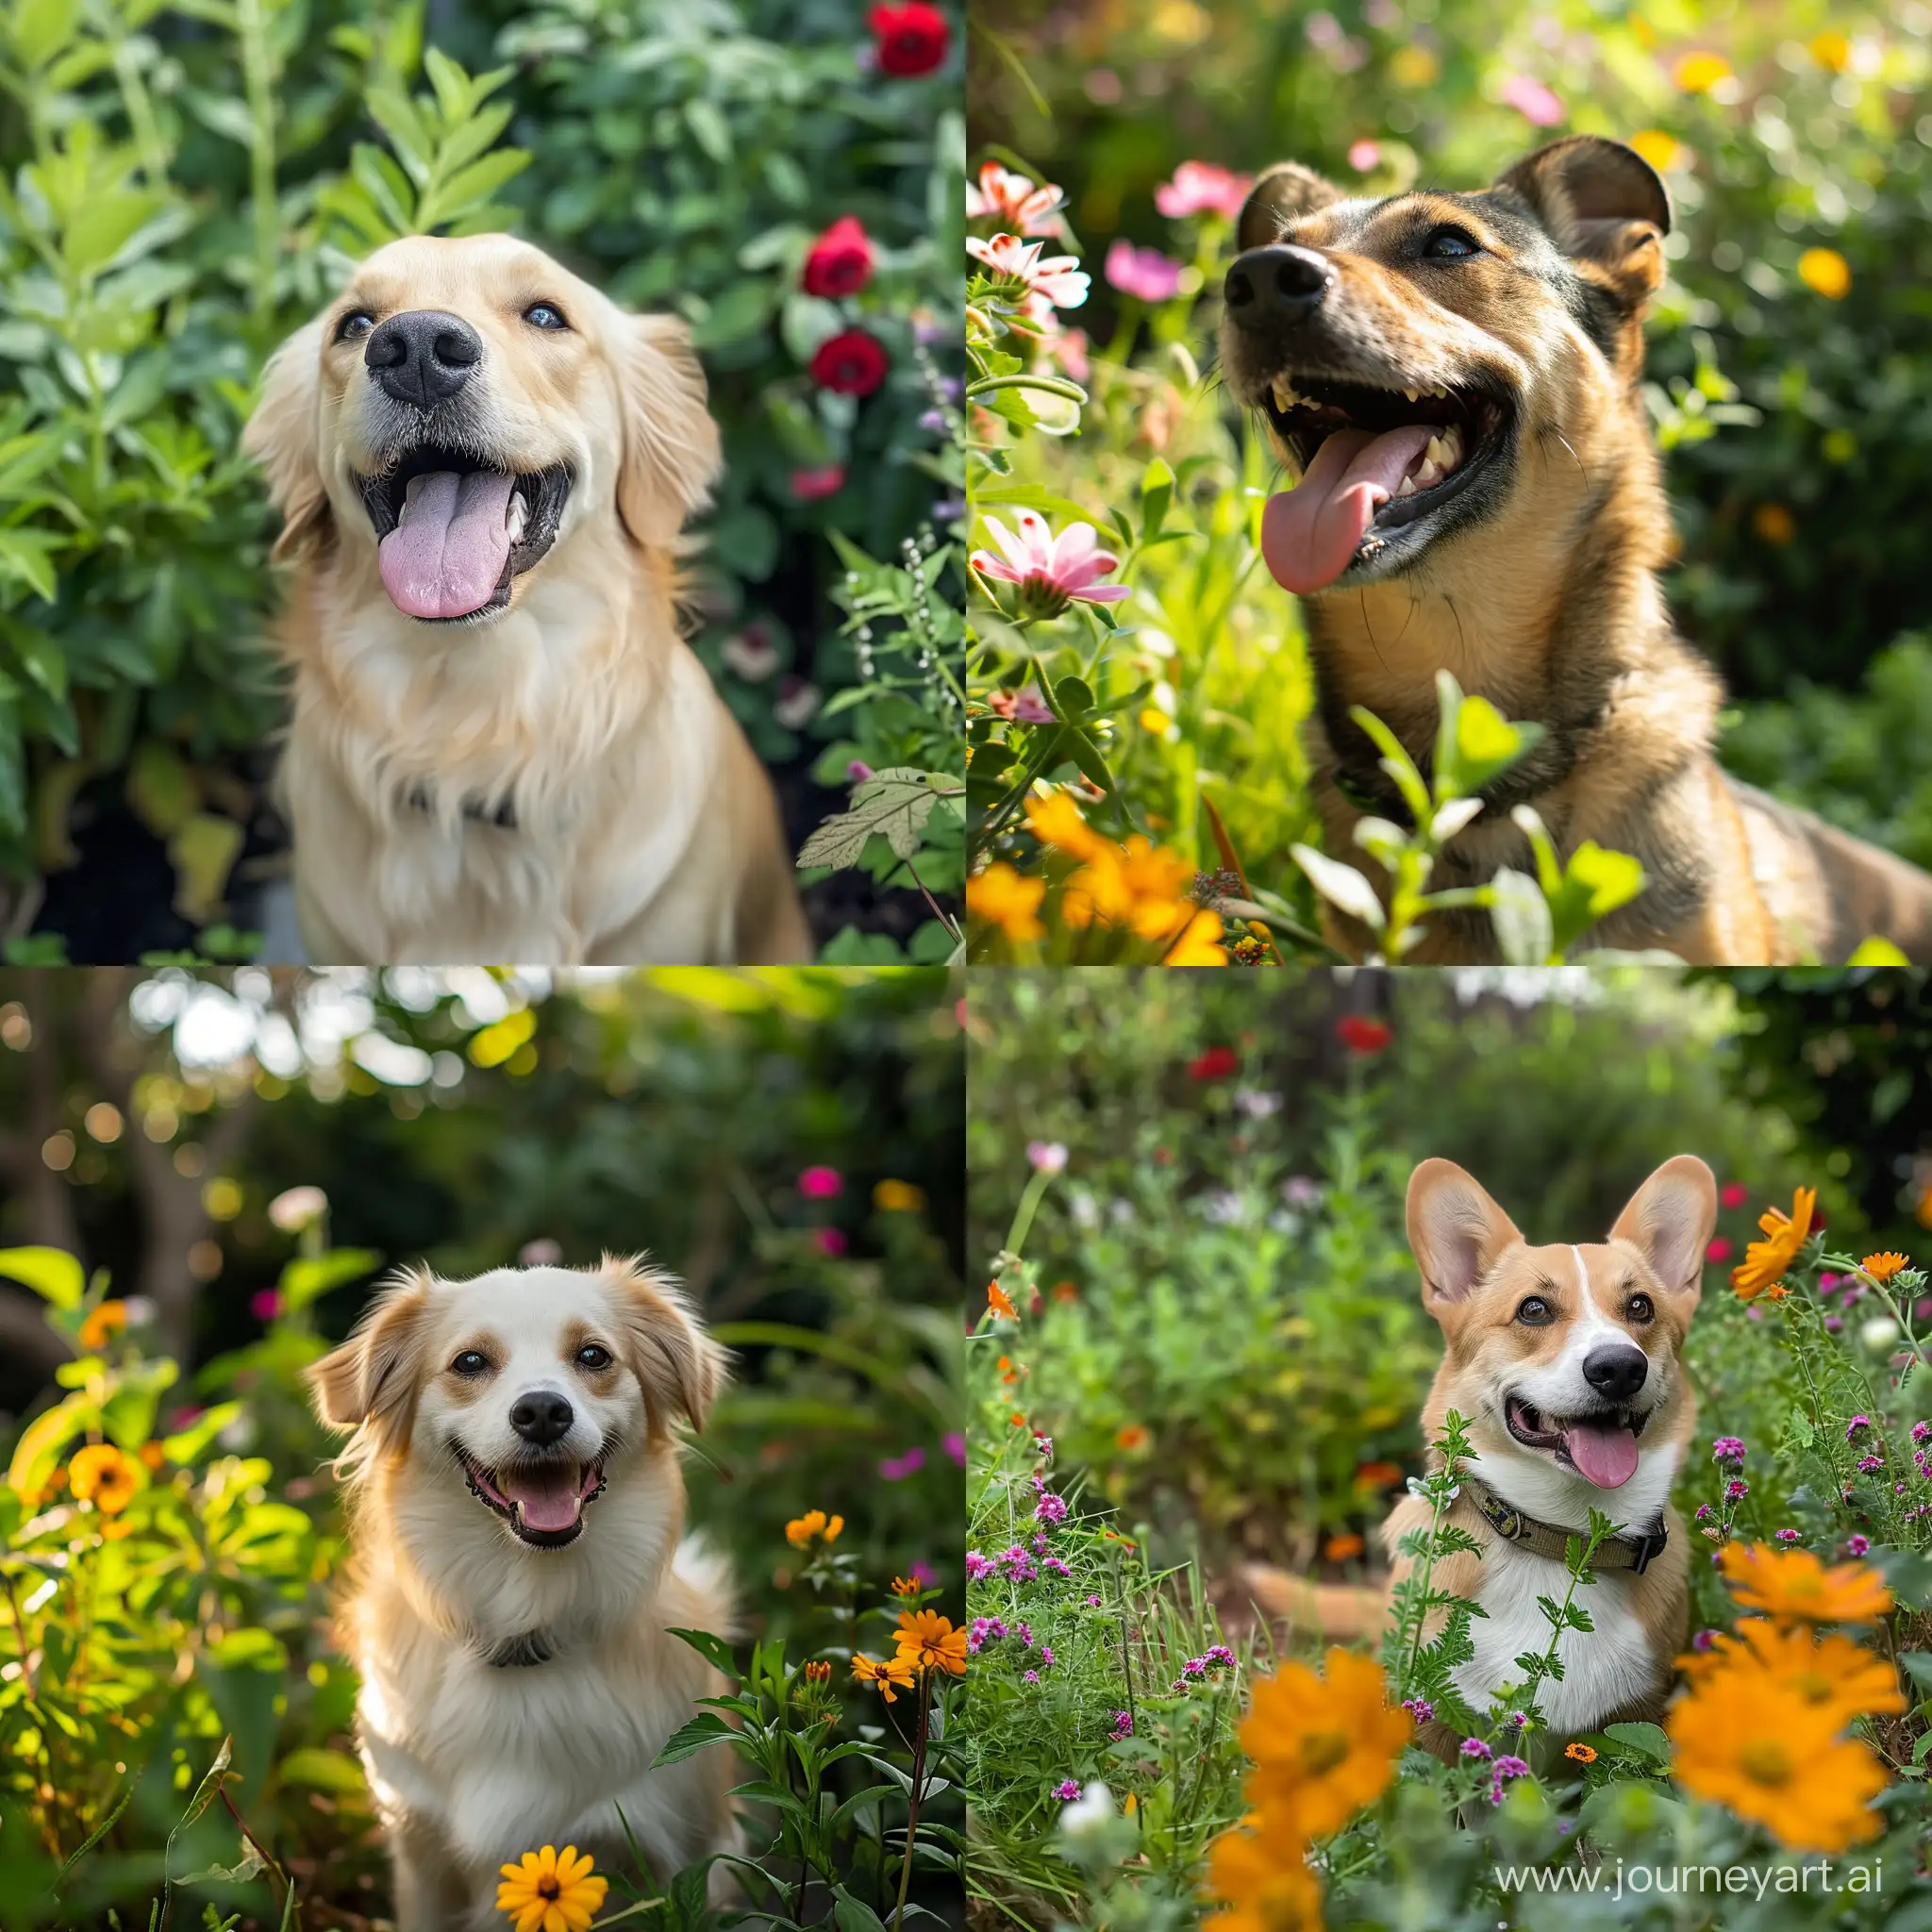 Joyful-Canine-Frolicking-in-Lush-Garden